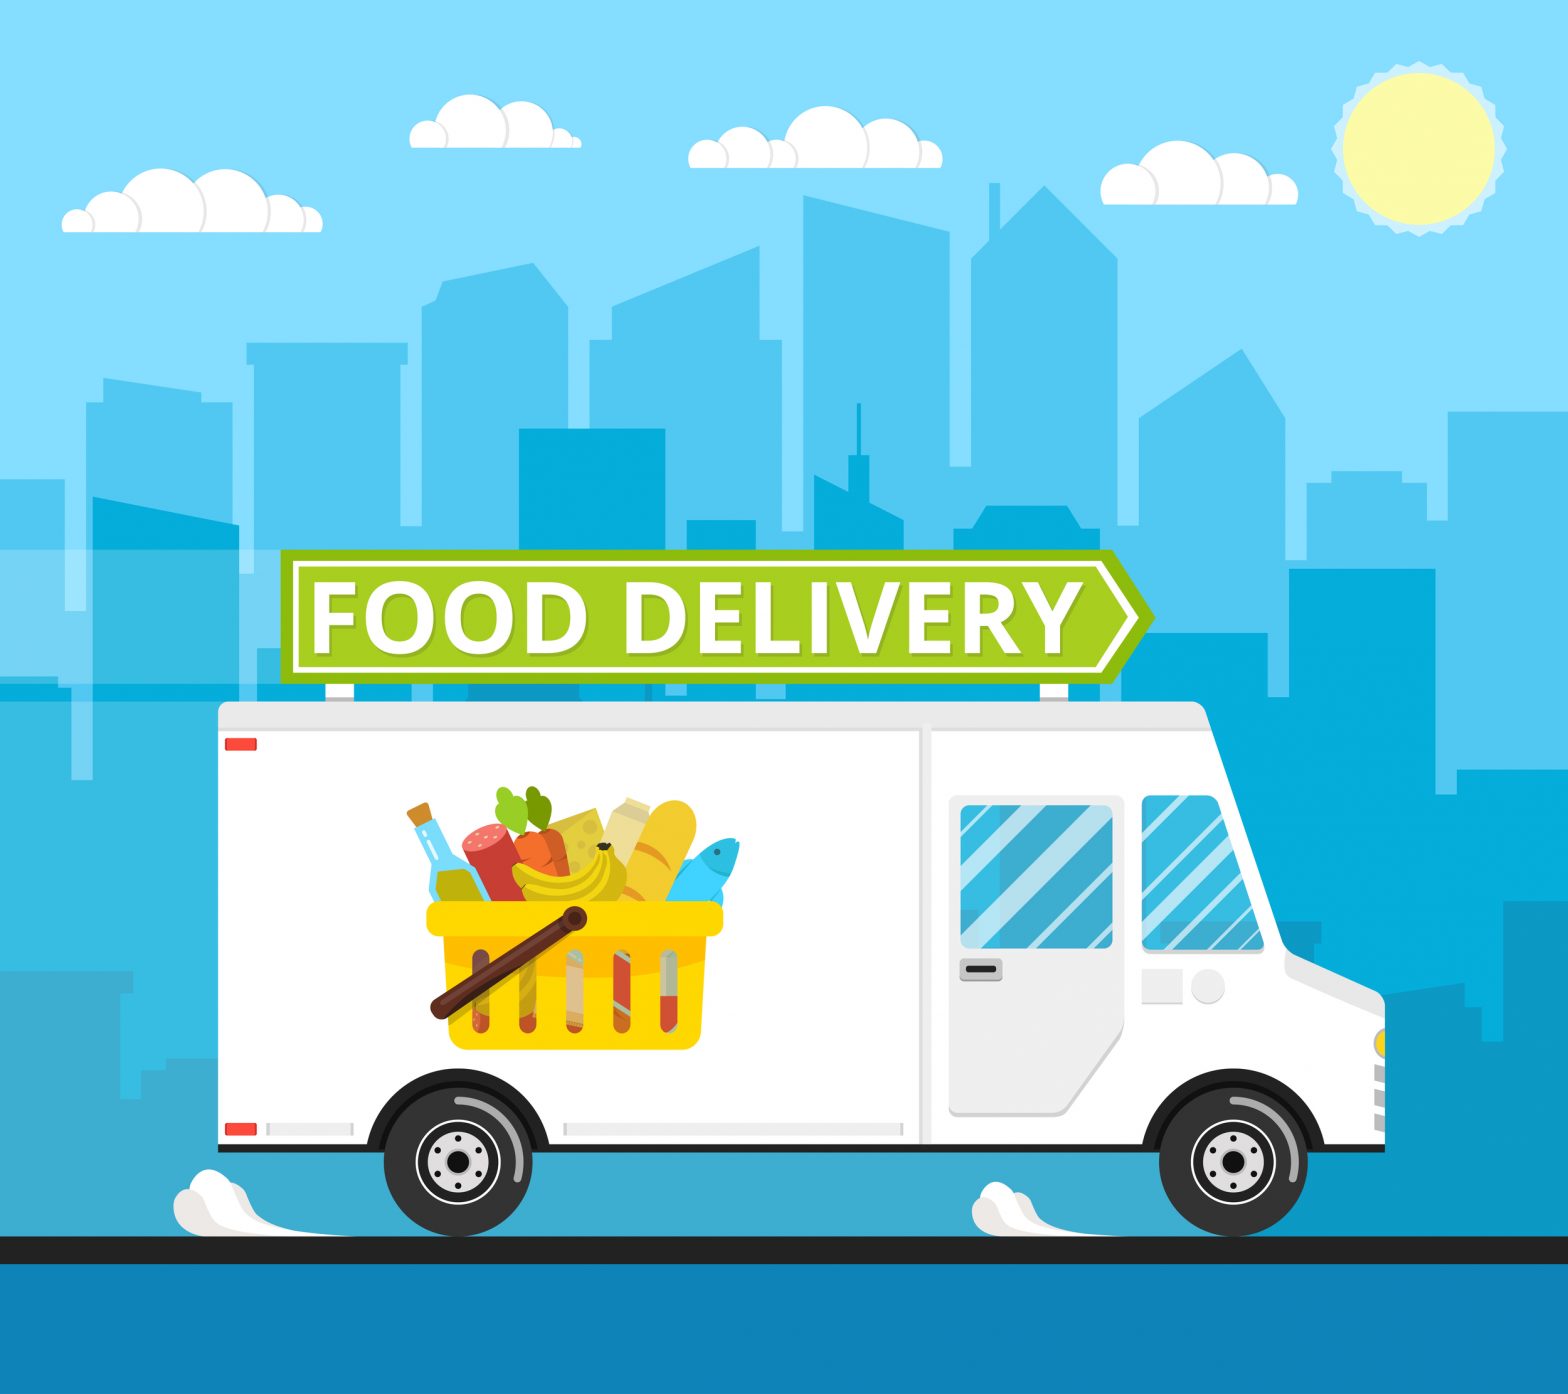 Food Delivery Logistic Market